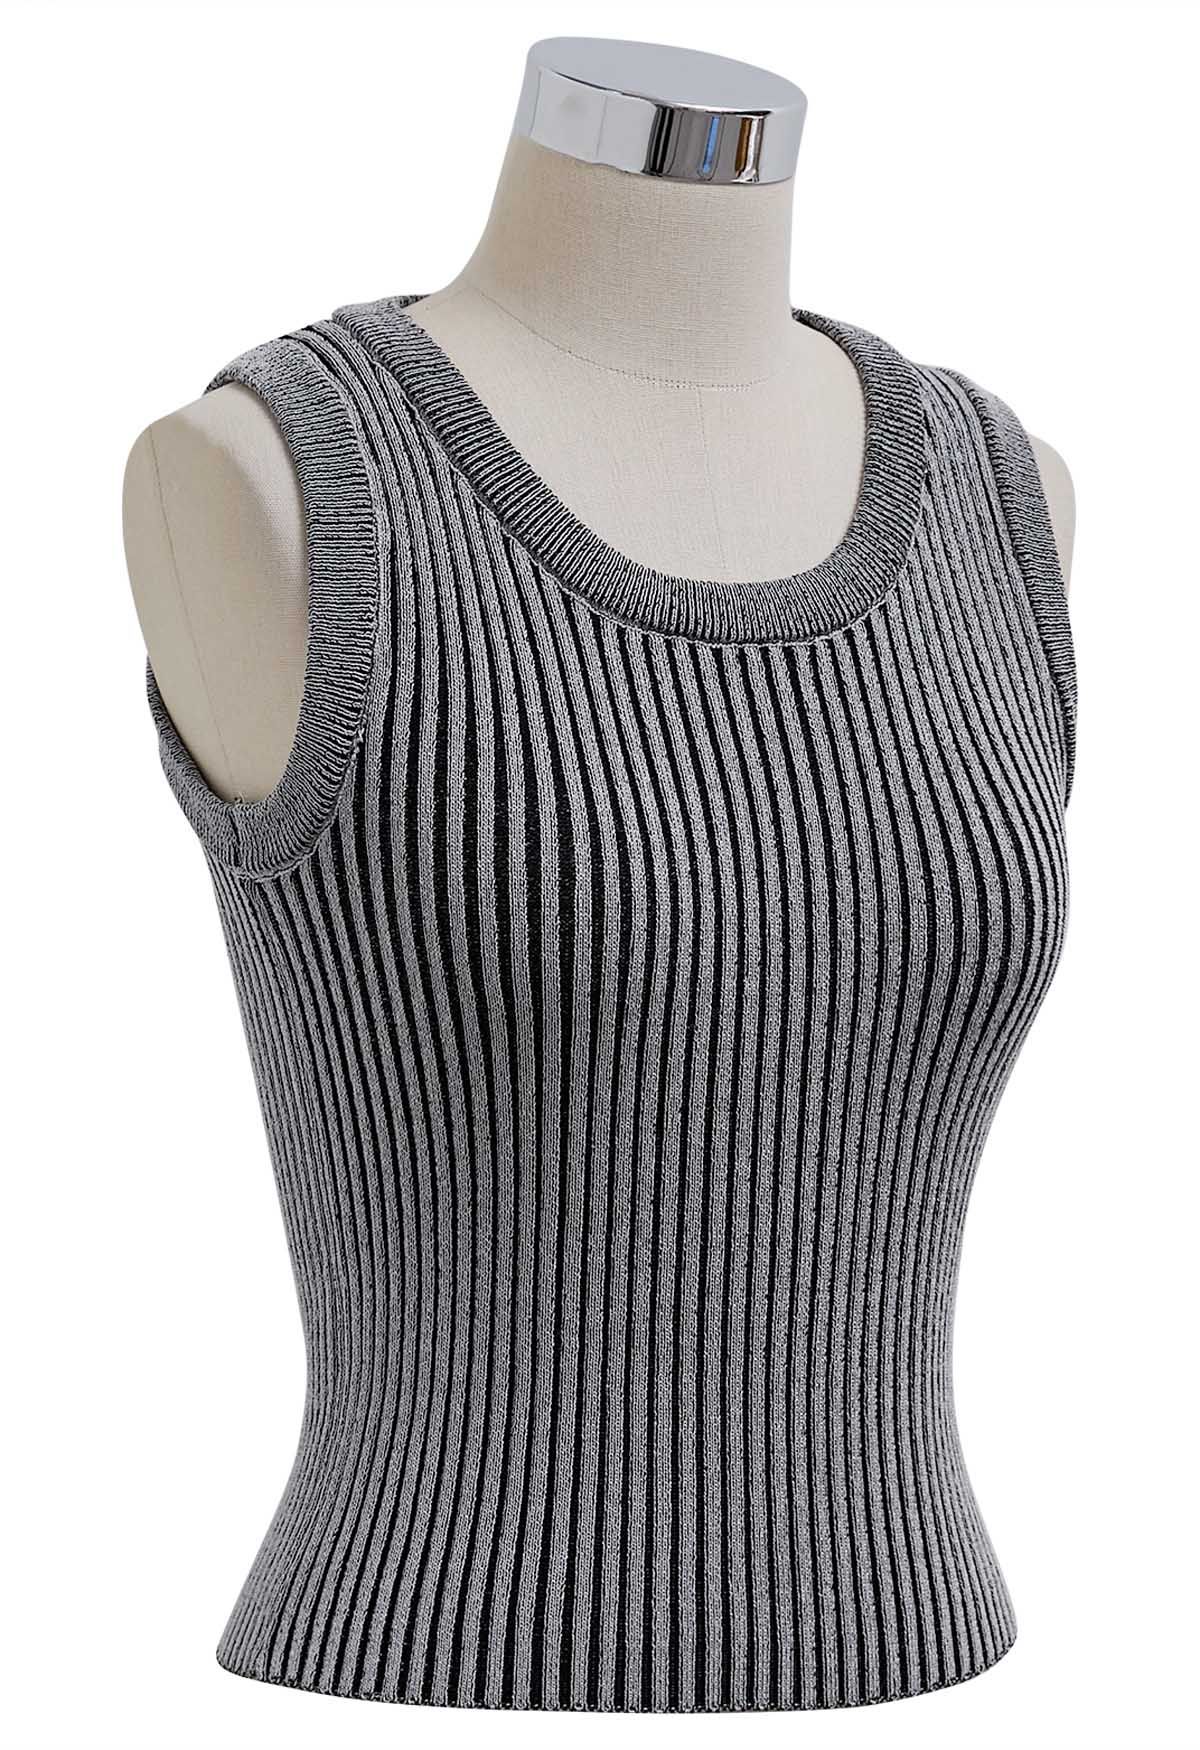 Stripe Texture Knit Tank Top in Grey